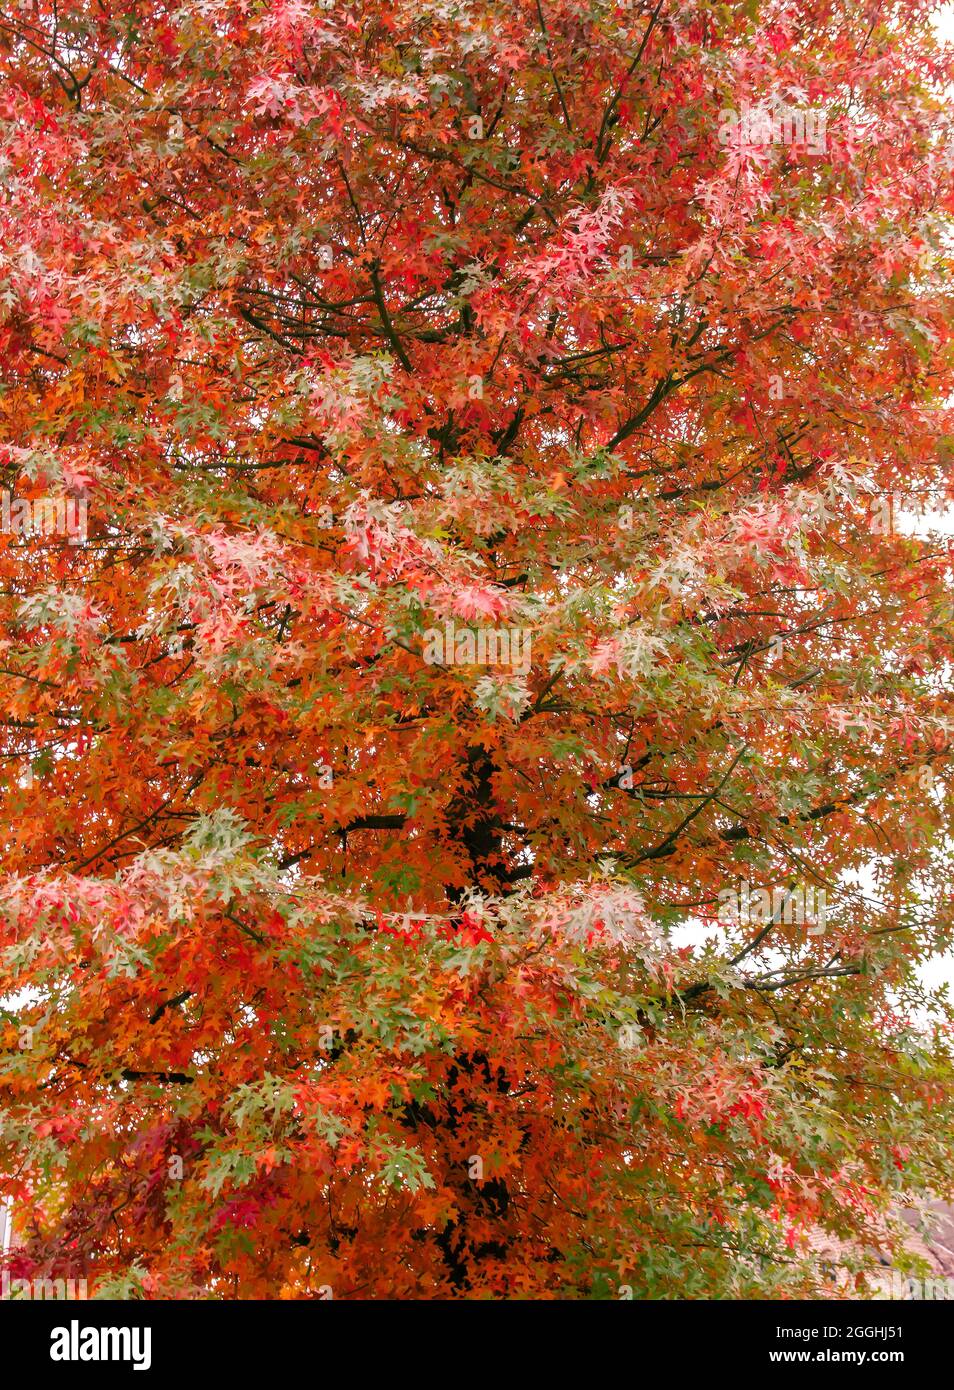 Quercus palustris pin oak tree typical autumnal colorful deciduous foliage Stock Photo